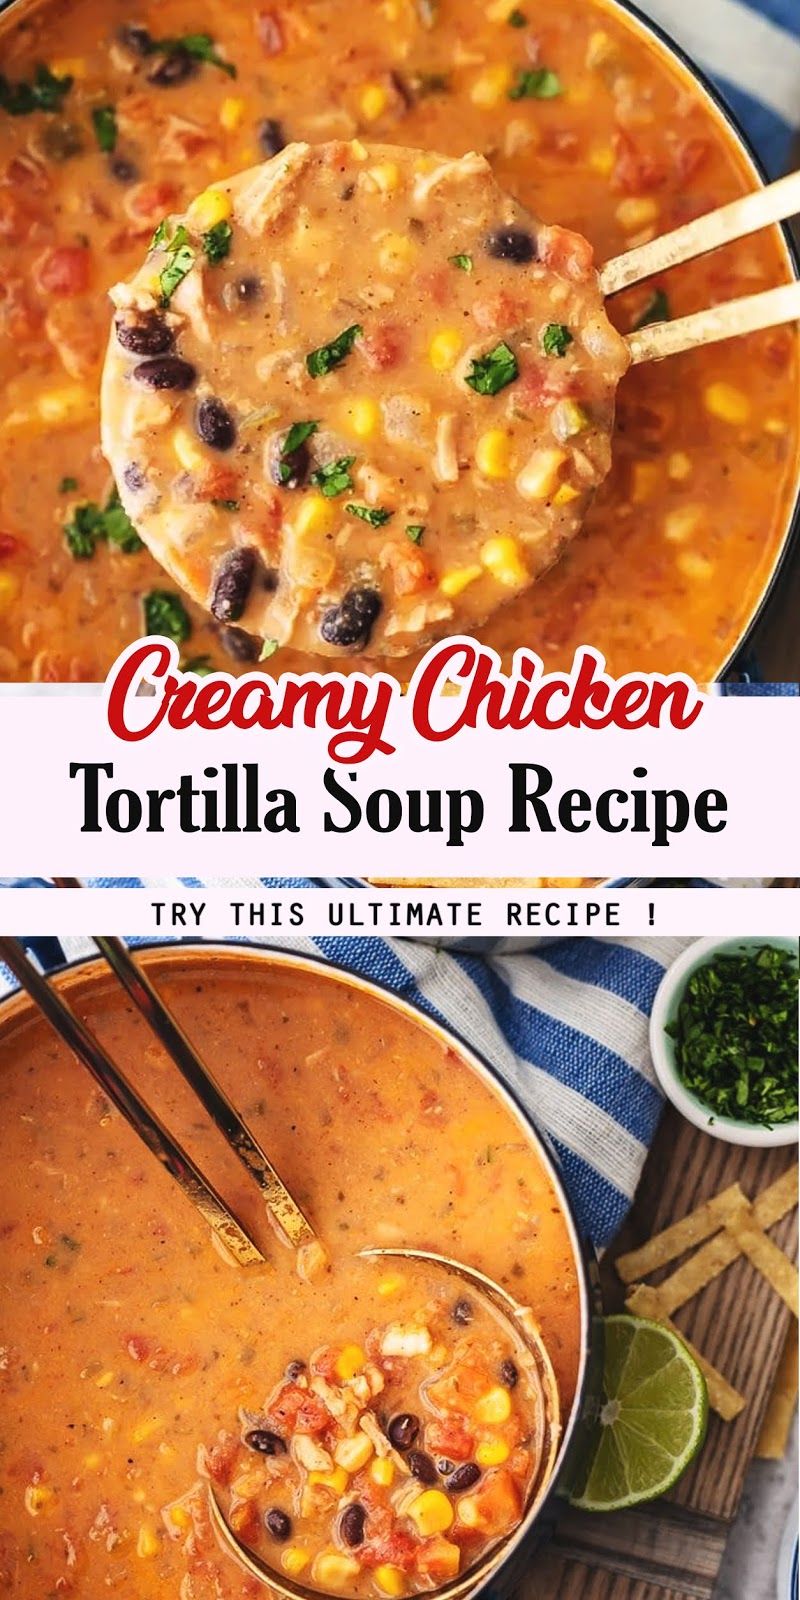 CREAMY CHICKEN TORTILLA SOUP RECIPE - 3 SECONDS